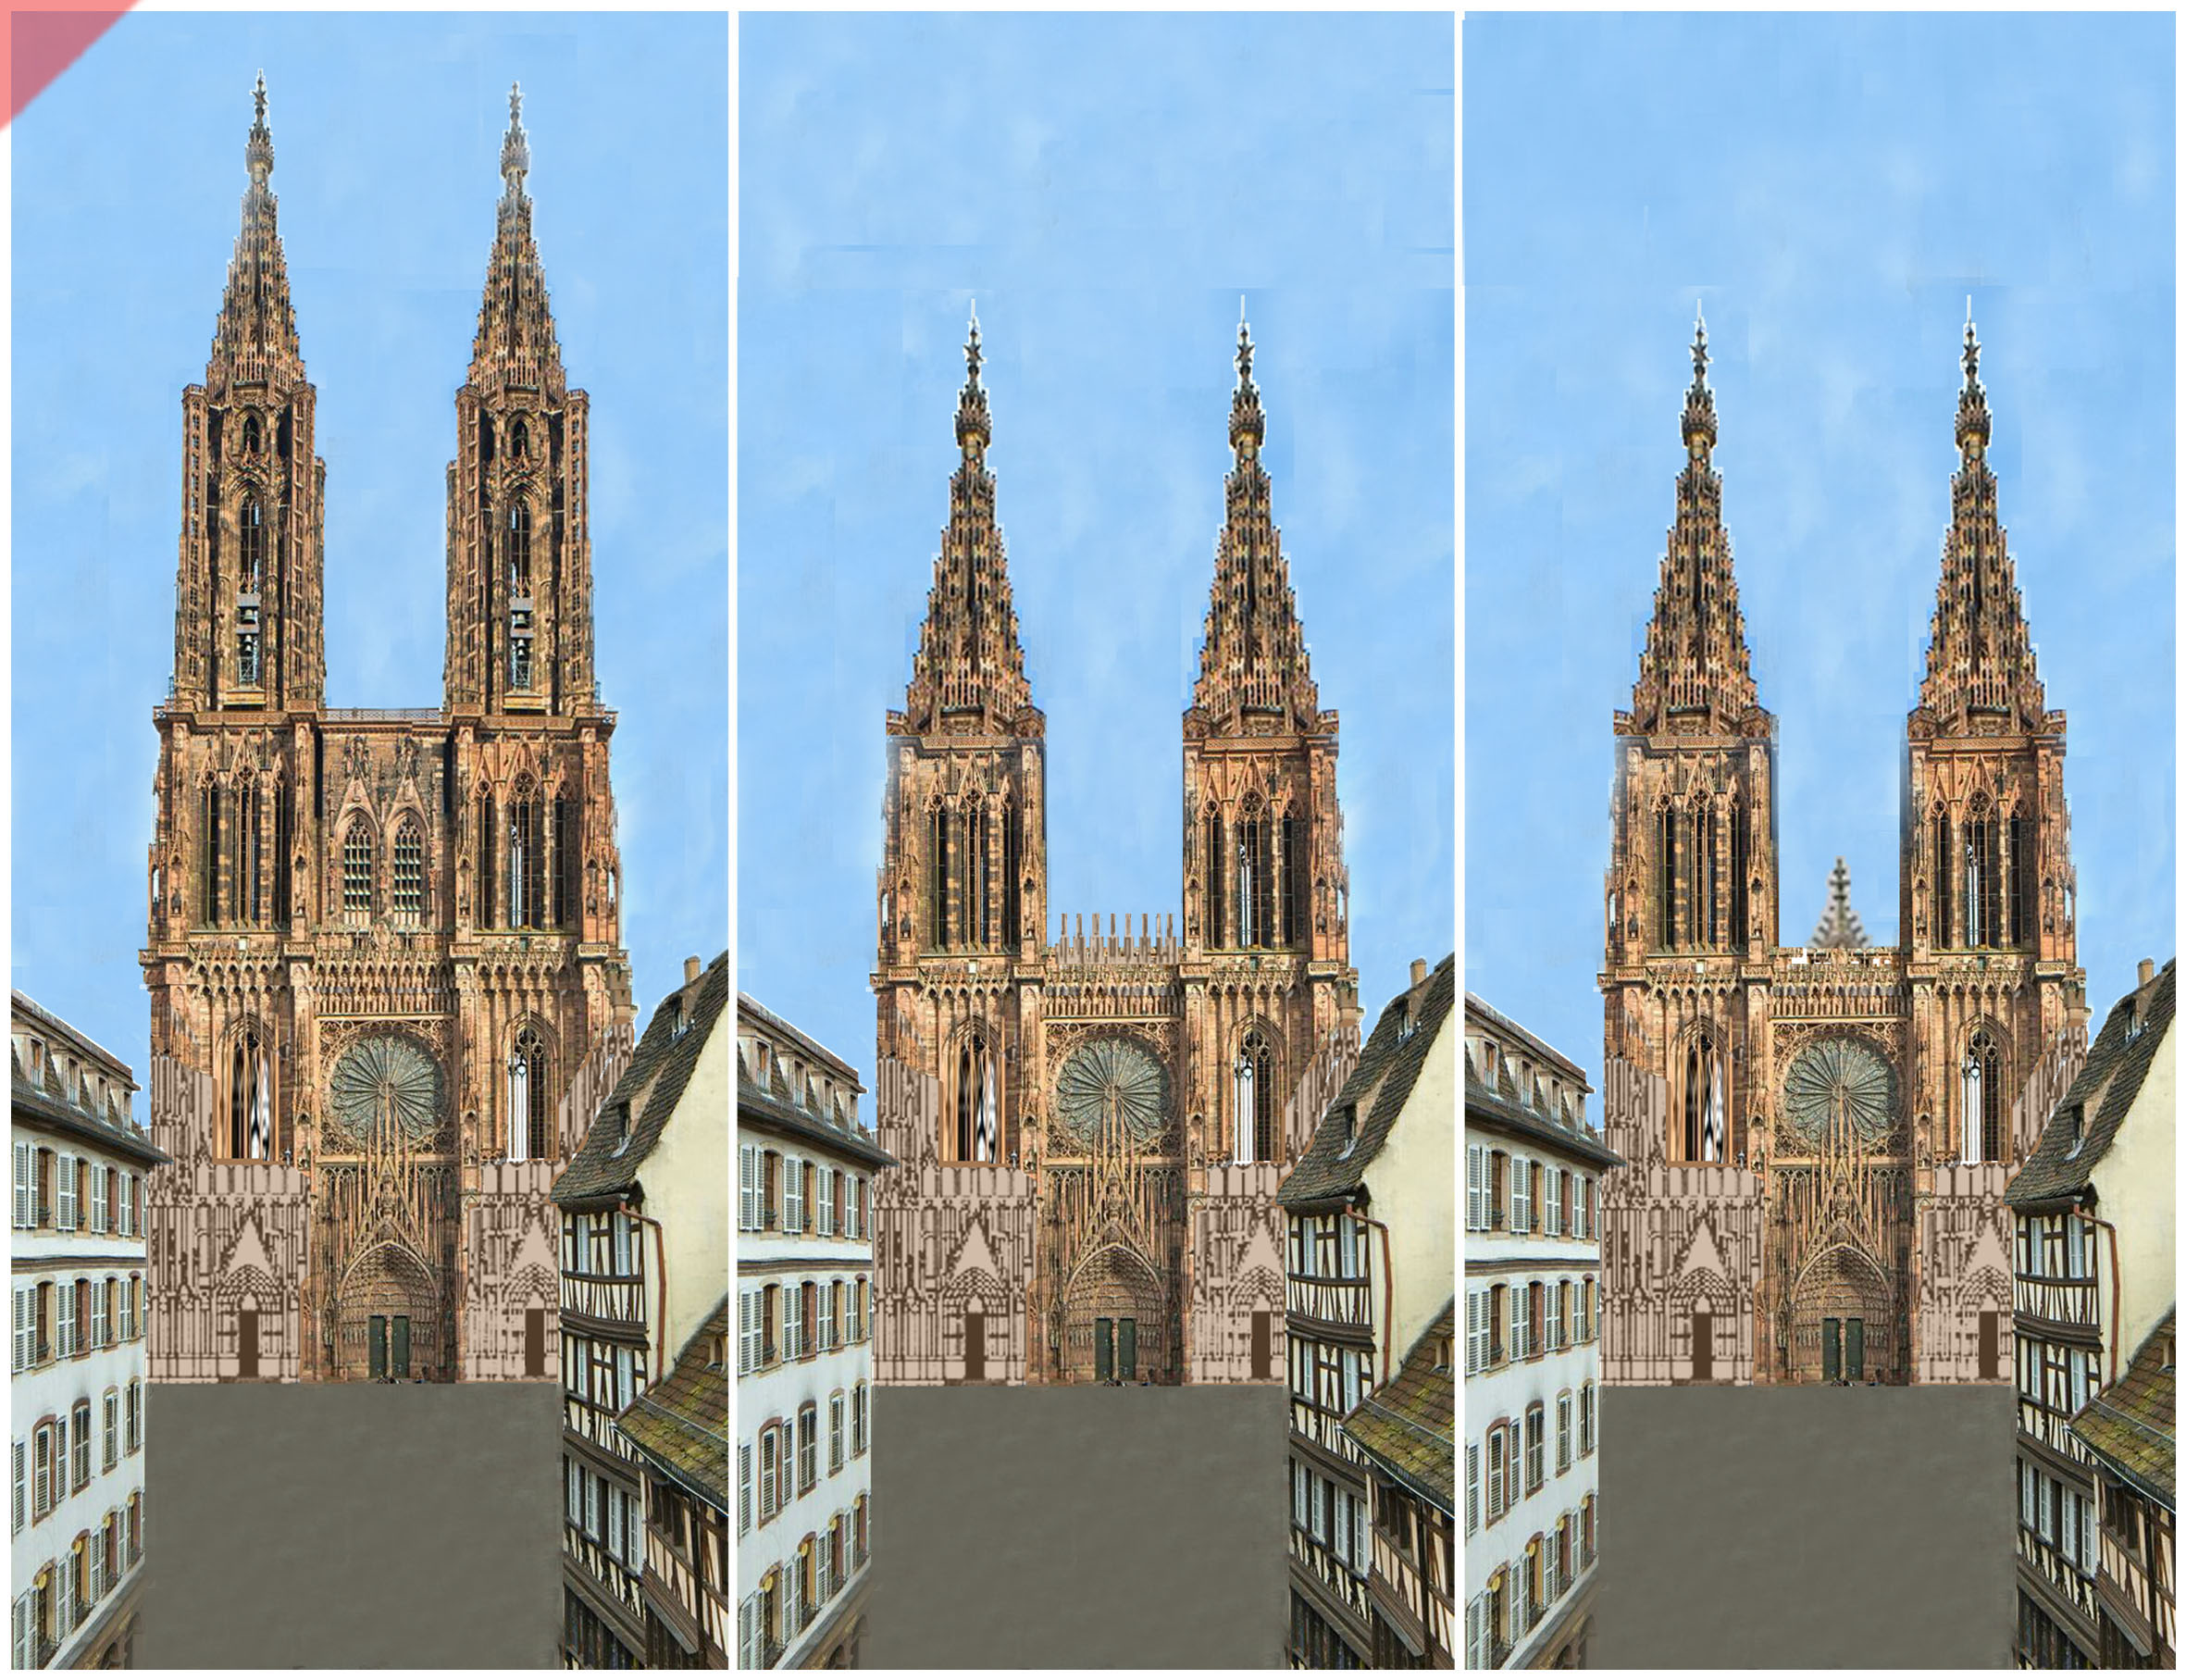 Strassburg-Münster-Cathédrale-tours-2-deux-prévu-toit-de-pierre-façade-ouest-Straßburg-cathedrale-2-two-towers-kathedrale-pitched-roof-stone-then-and-now